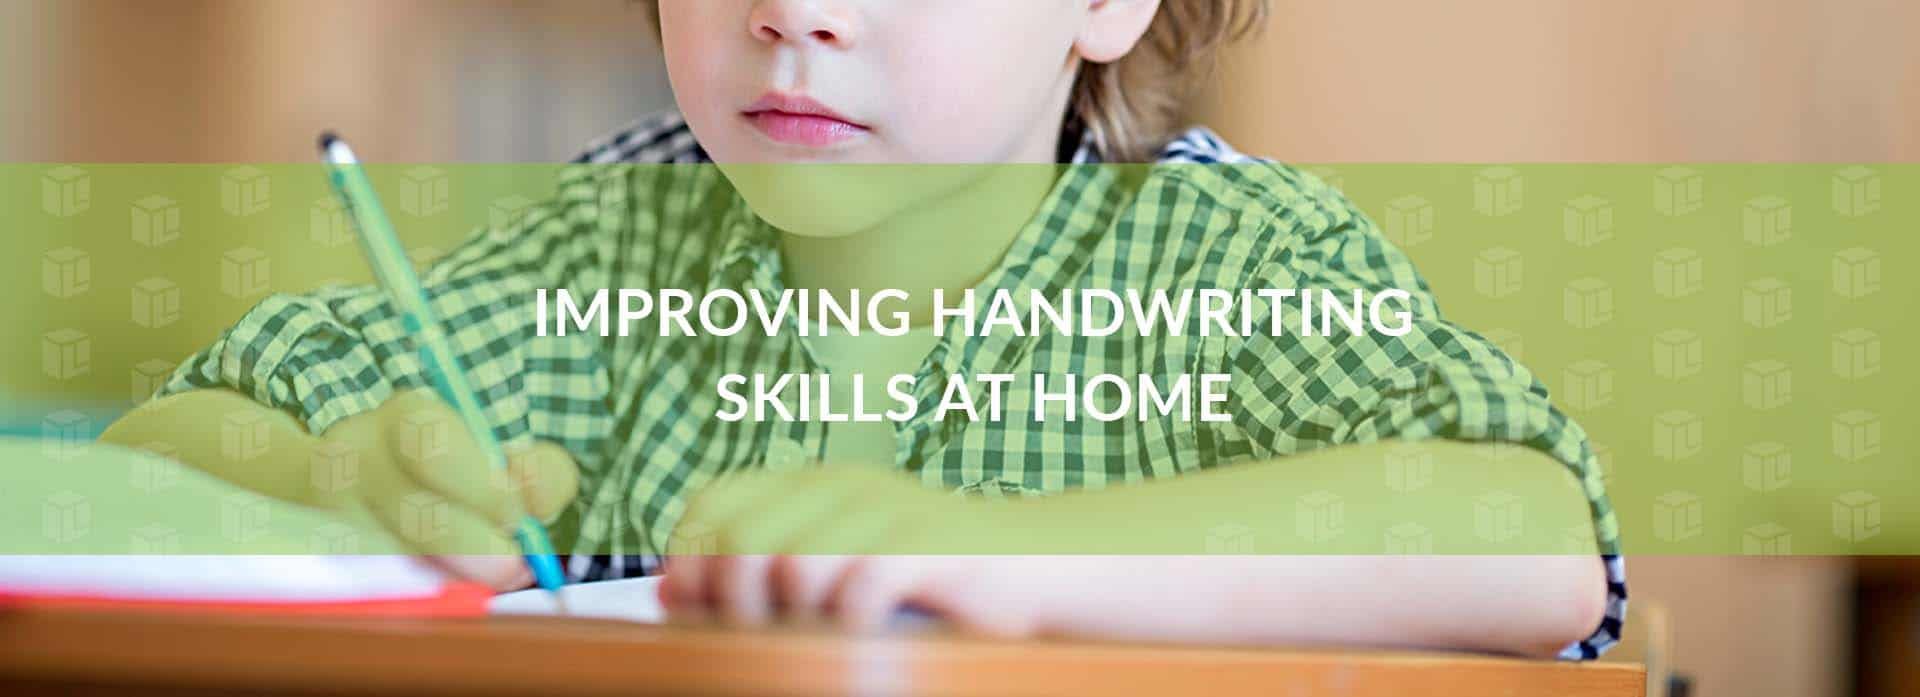 Improving Handwriting Skills At Home Improving Handwriting Skills At Home Improving Handwriting Skills At Home Improving Handwriting Skills At Home